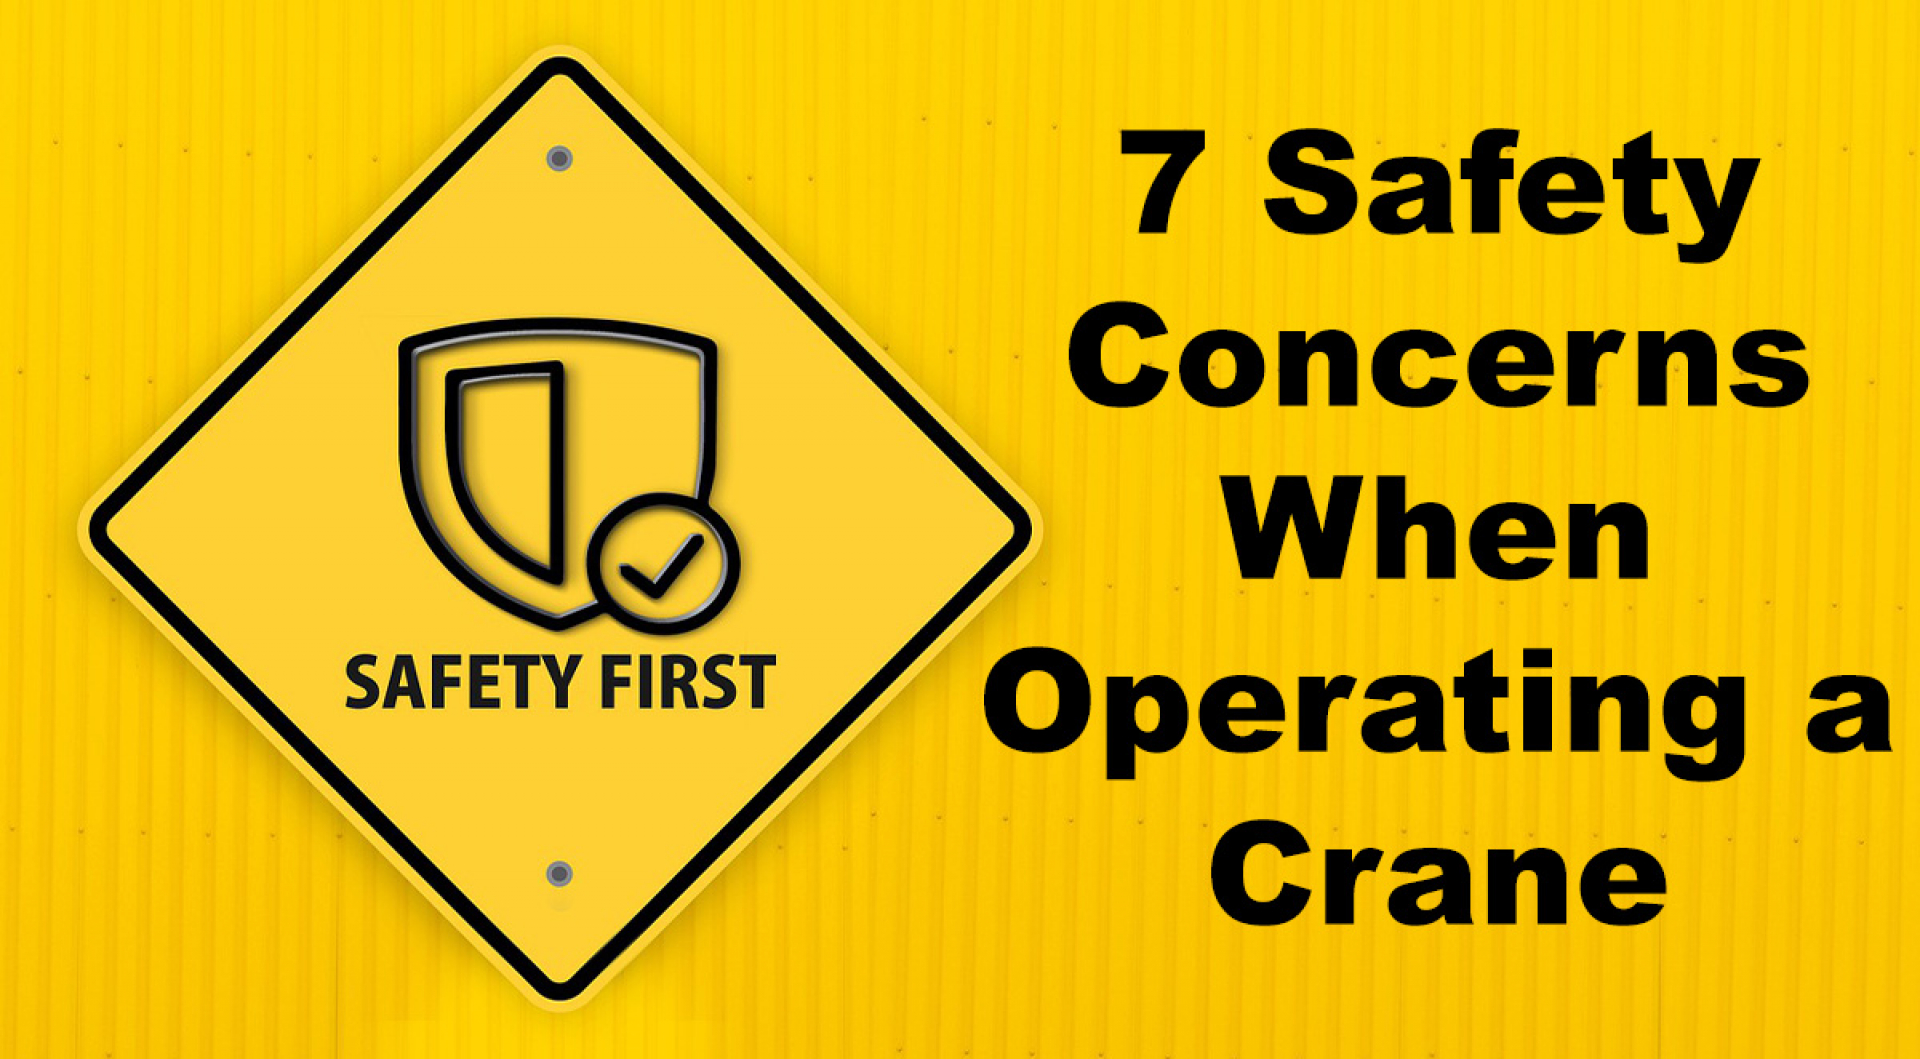 Seven Safety Concerns When Operating a Crane